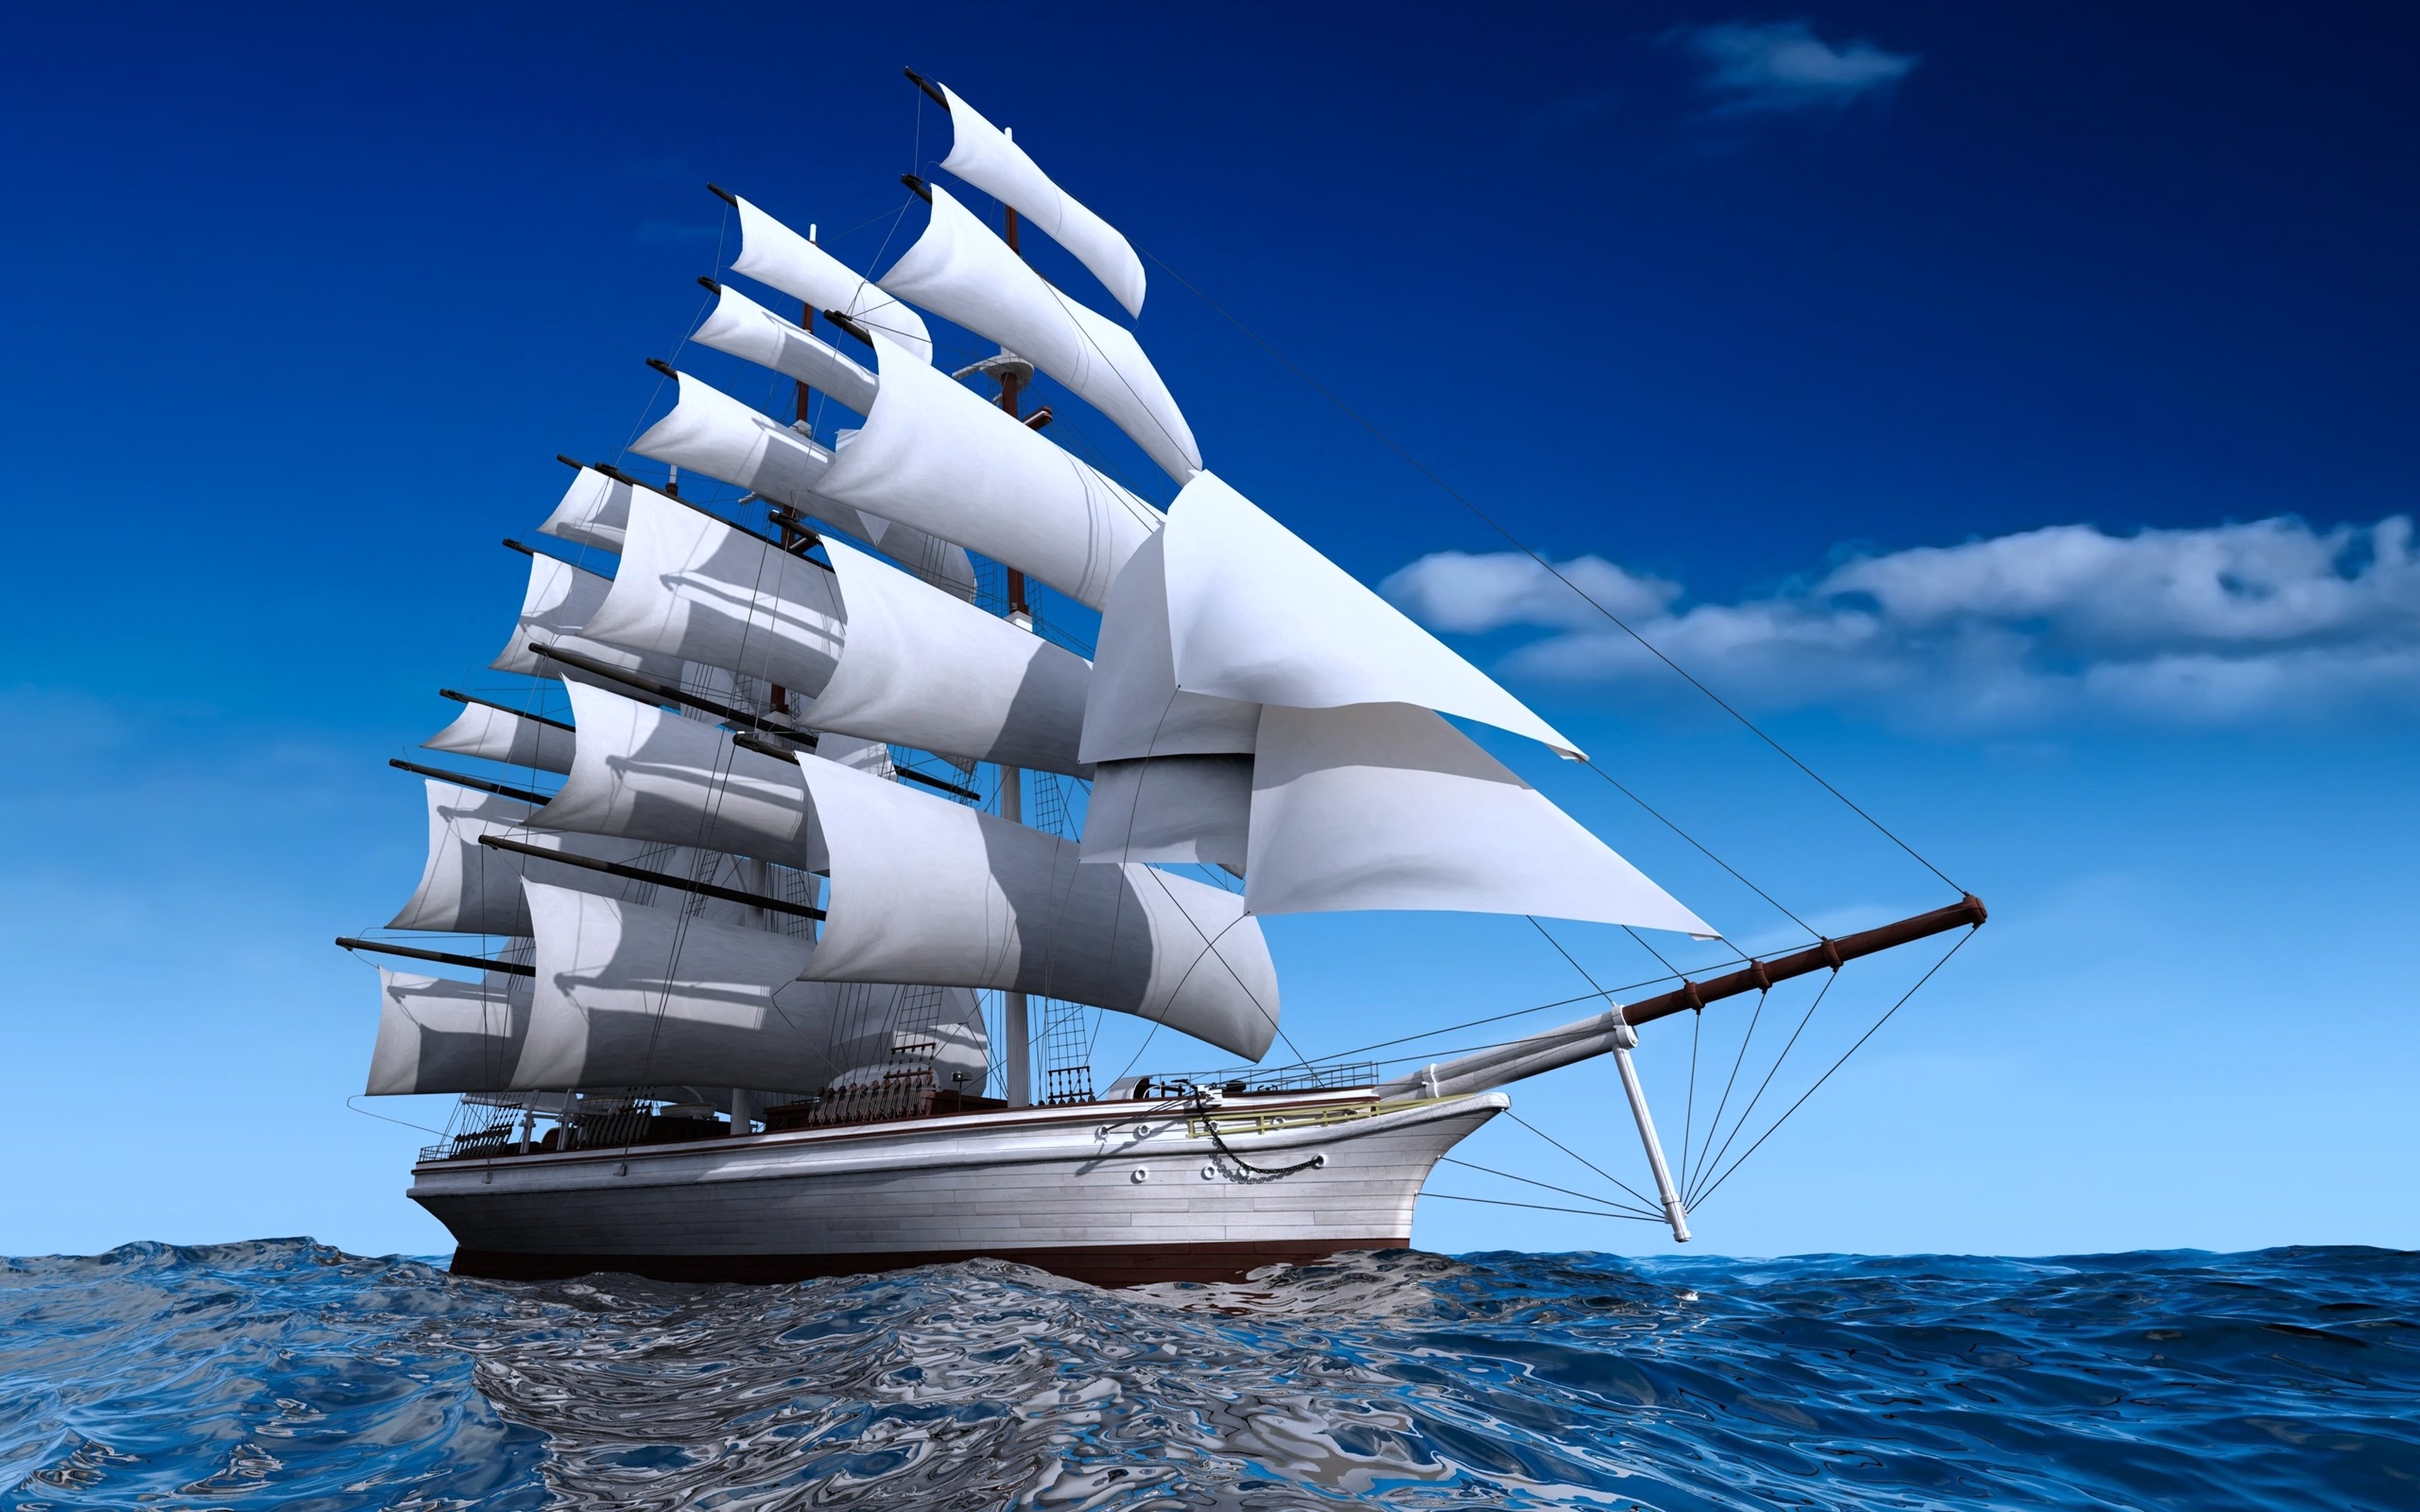 Sailing Ship wallpapers HD for desktop